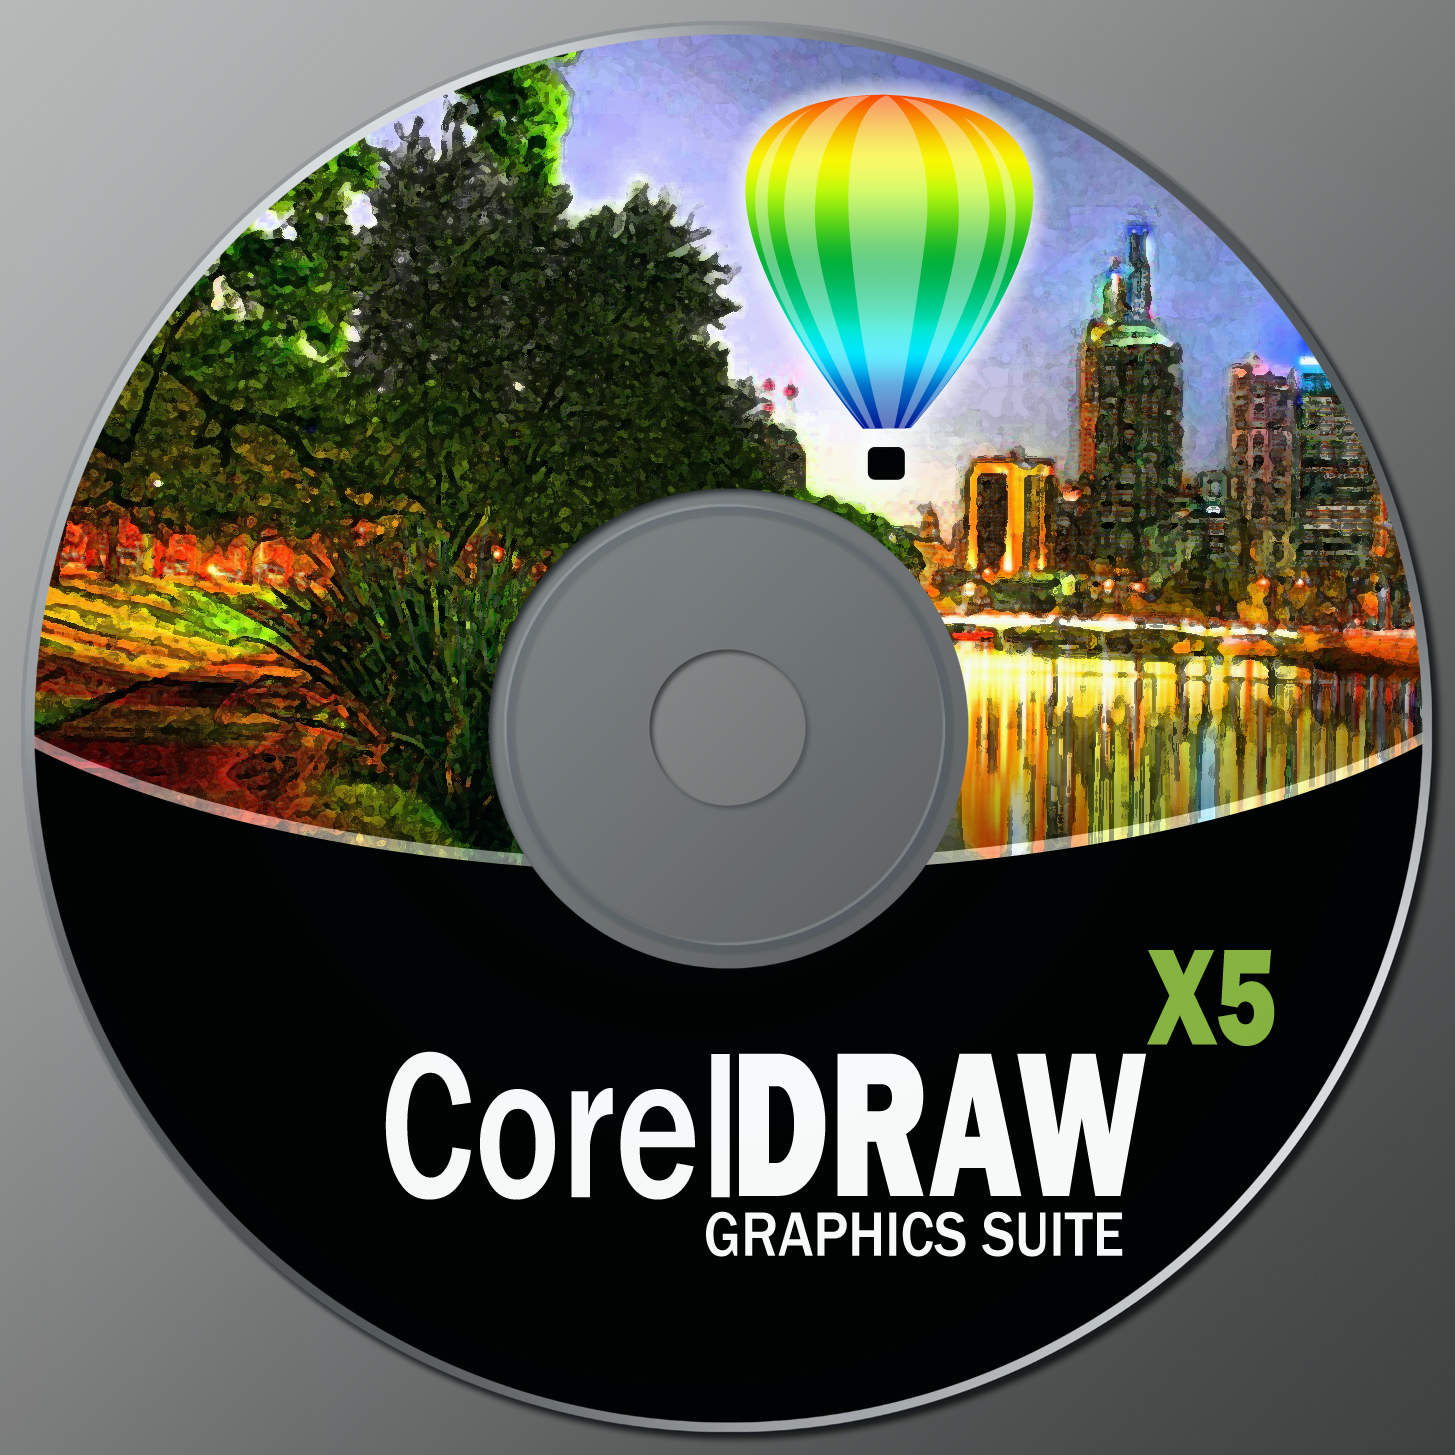 coreldraw x5 download for pc free